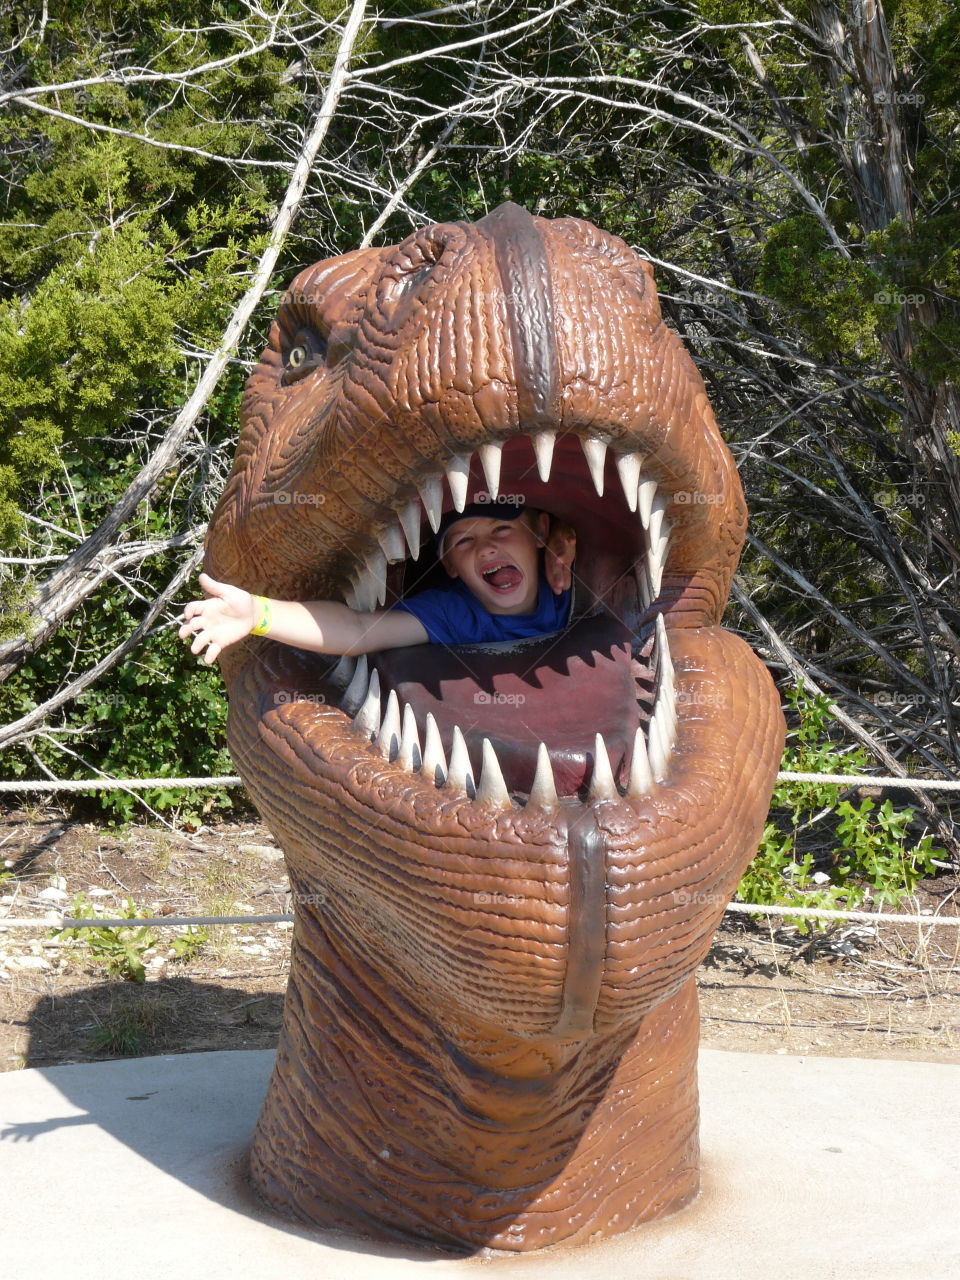 Boy inside the dinosaur's mouth